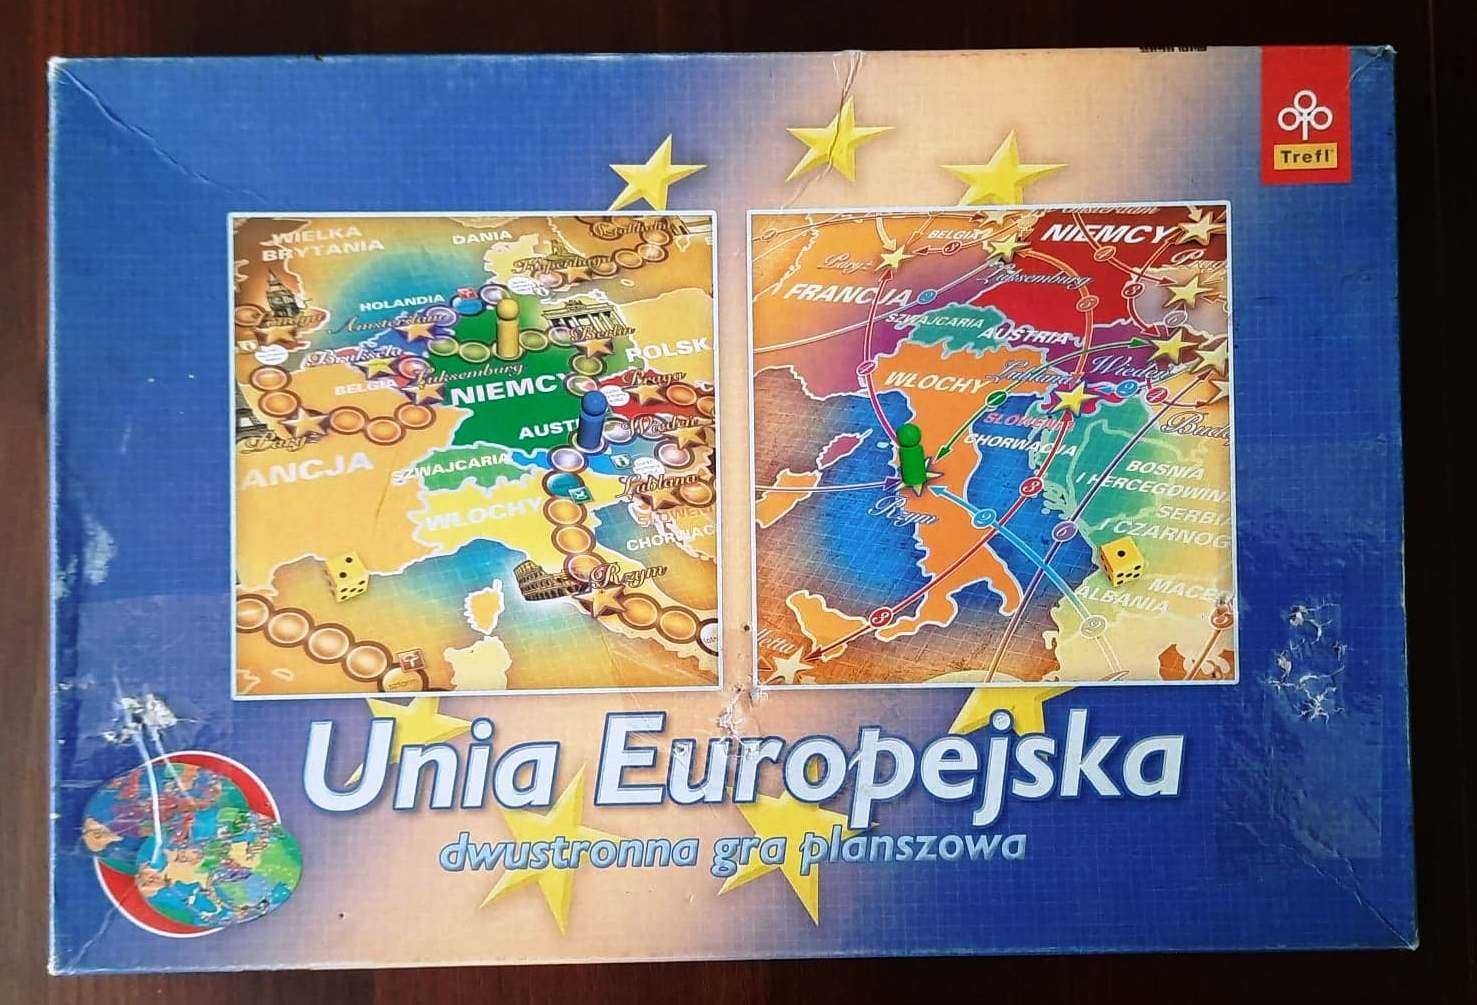 Unia Europejska – Gra planszowa, Trefl, dwustronna plansza